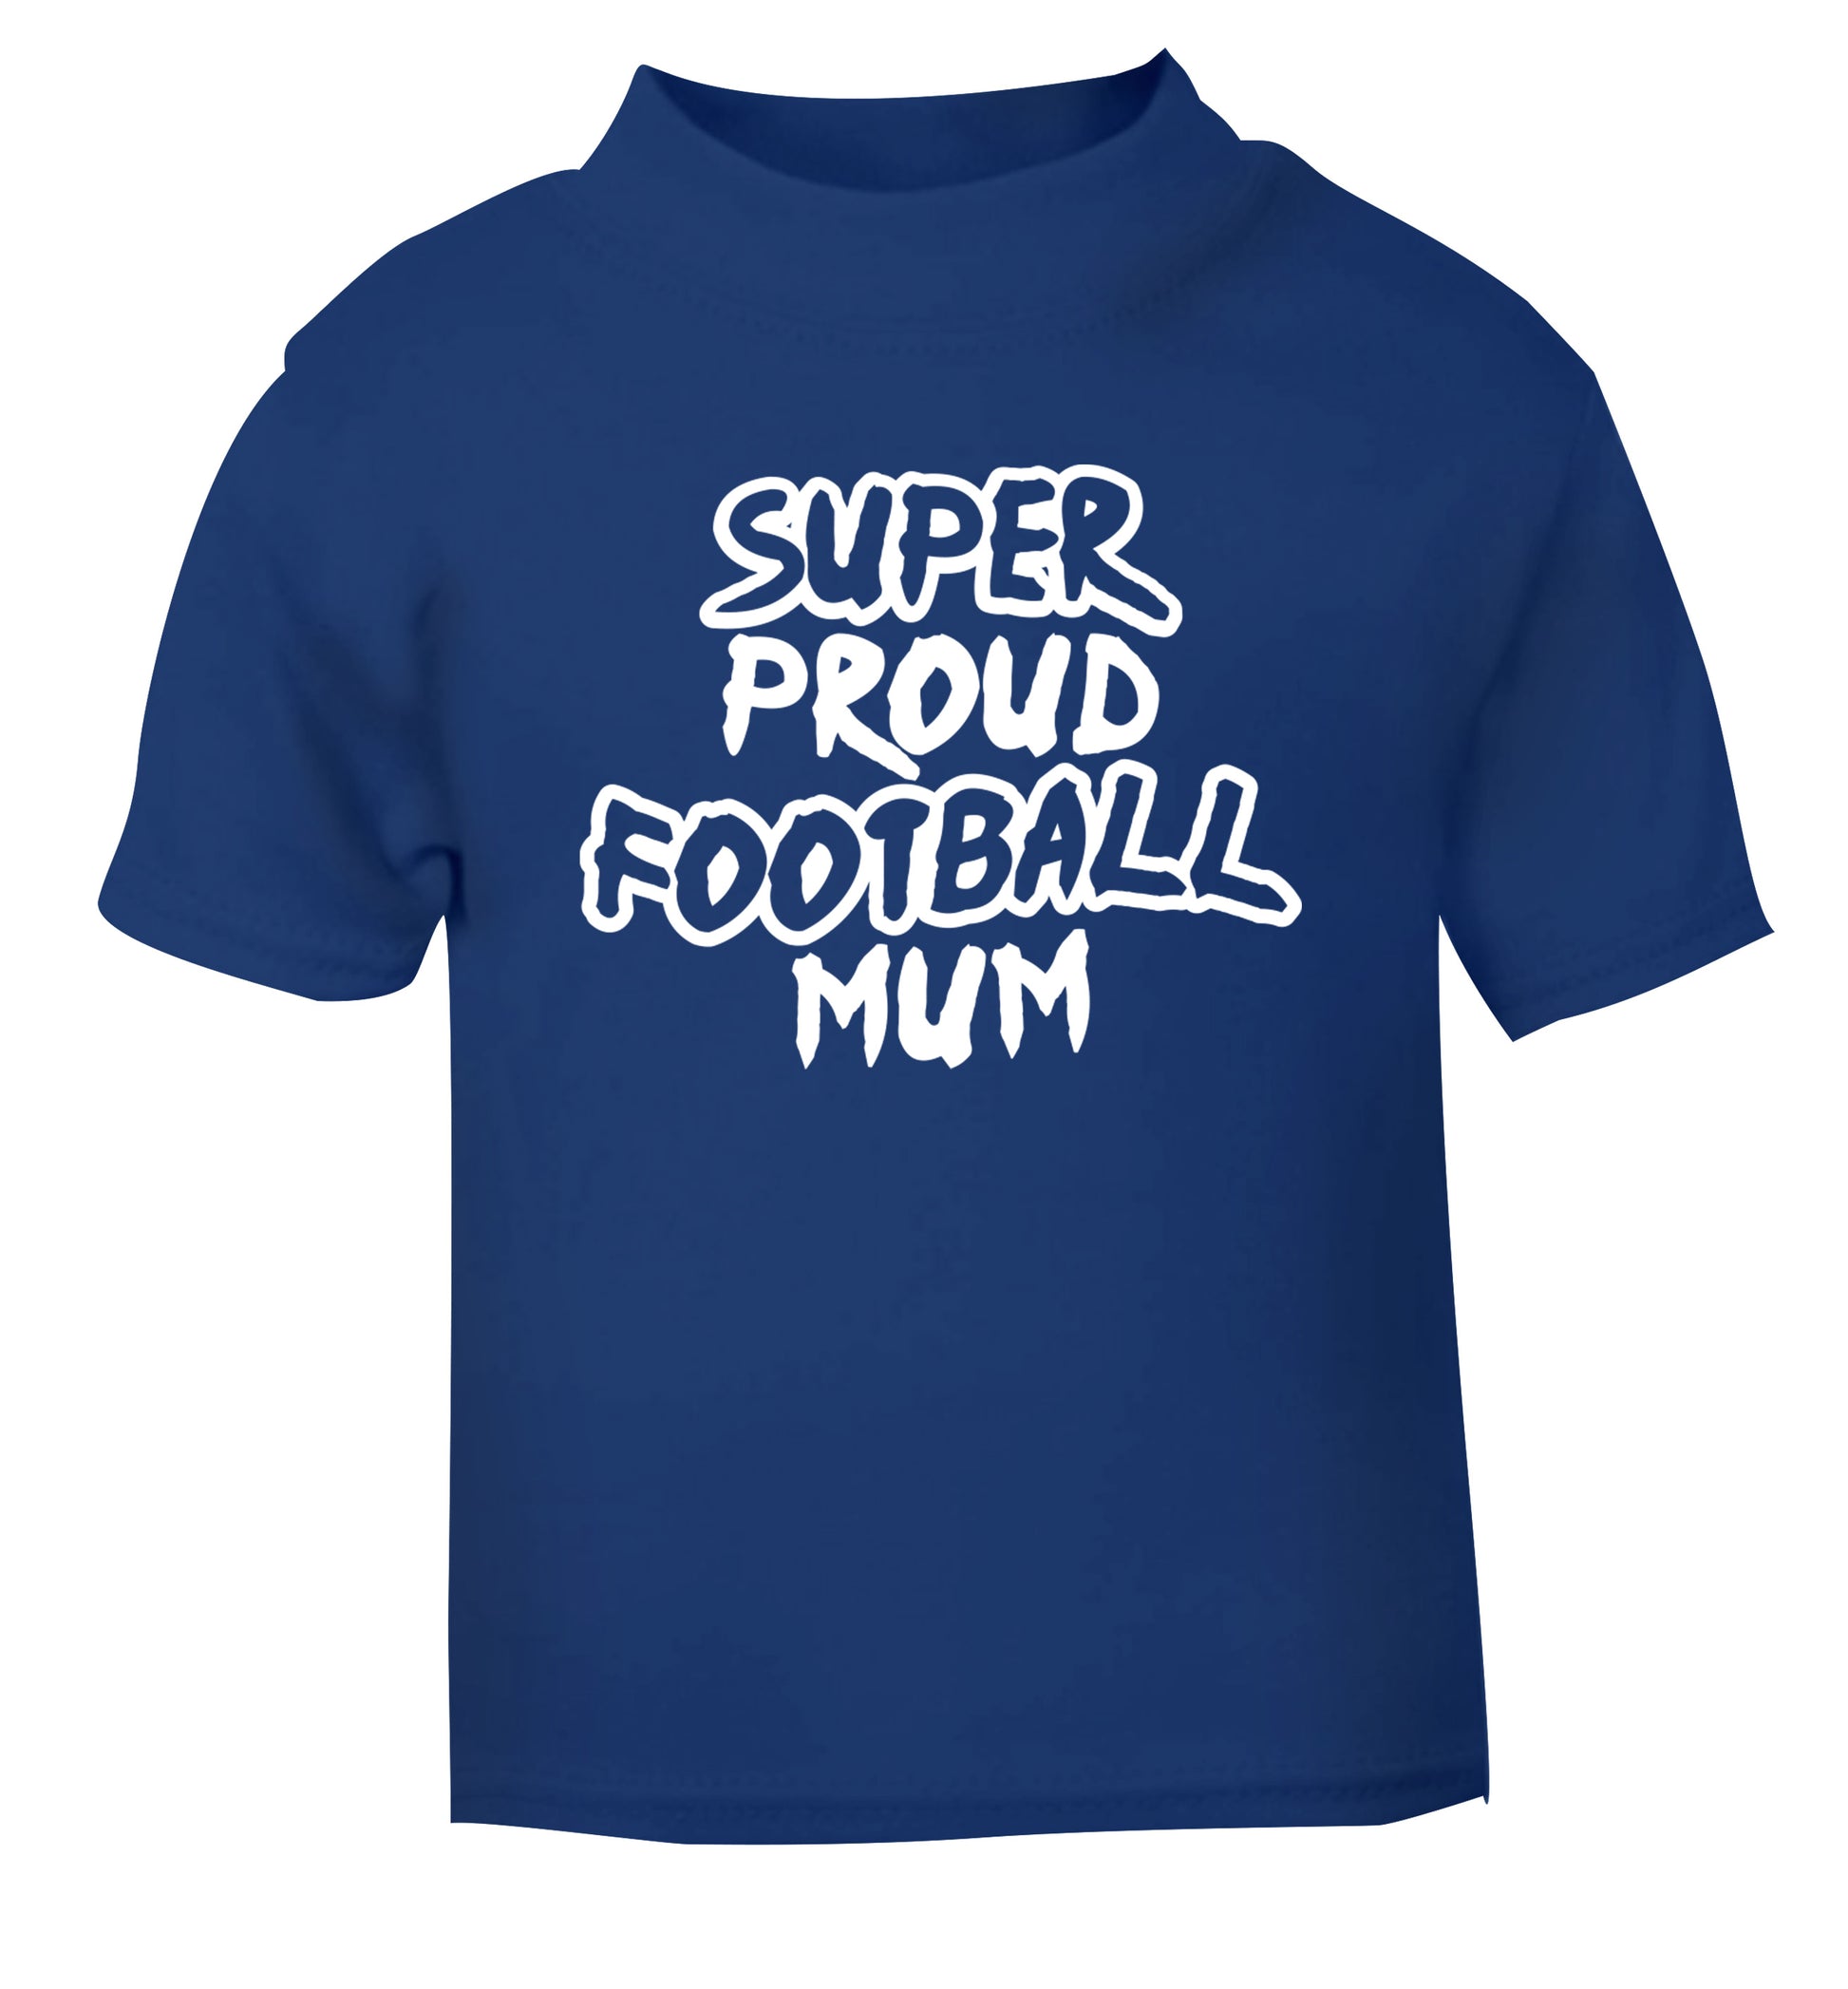 Super proud football mum blue Baby Toddler Tshirt 2 Years